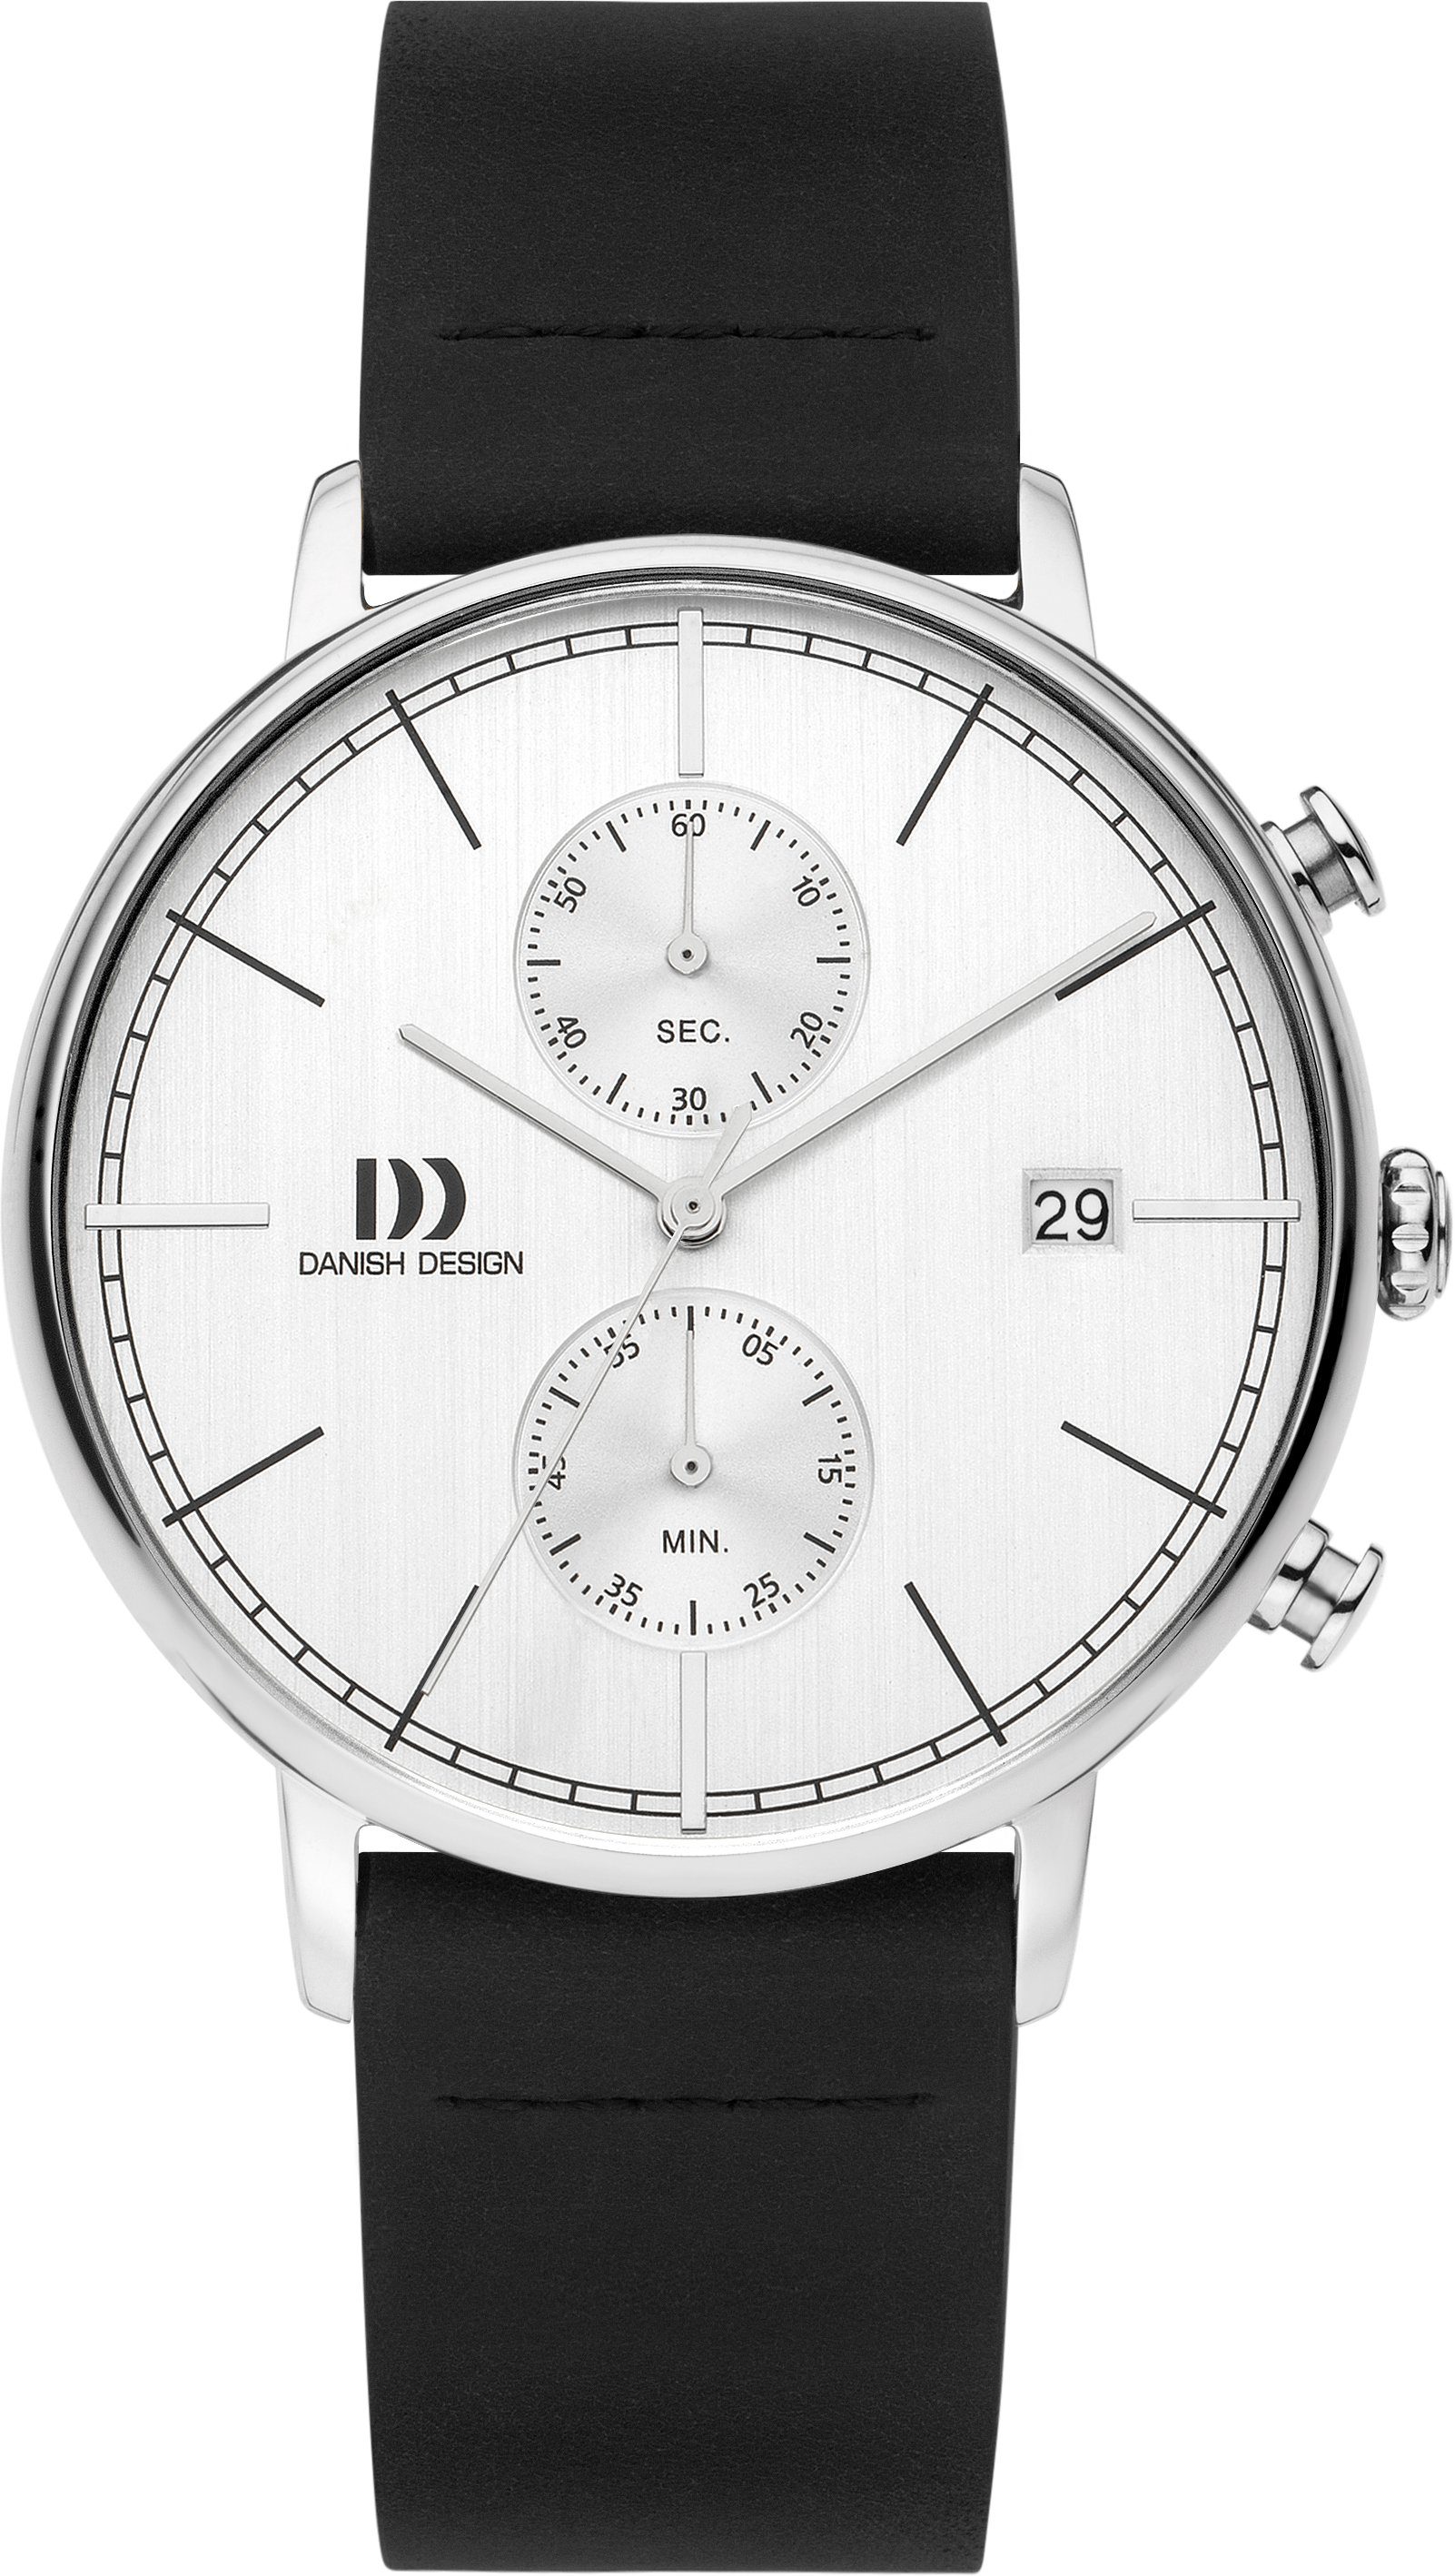 KOLTUR Chronograph Lederband ⌀42mm Design Danish II Edelstahl Chronograph CHRONO Silber